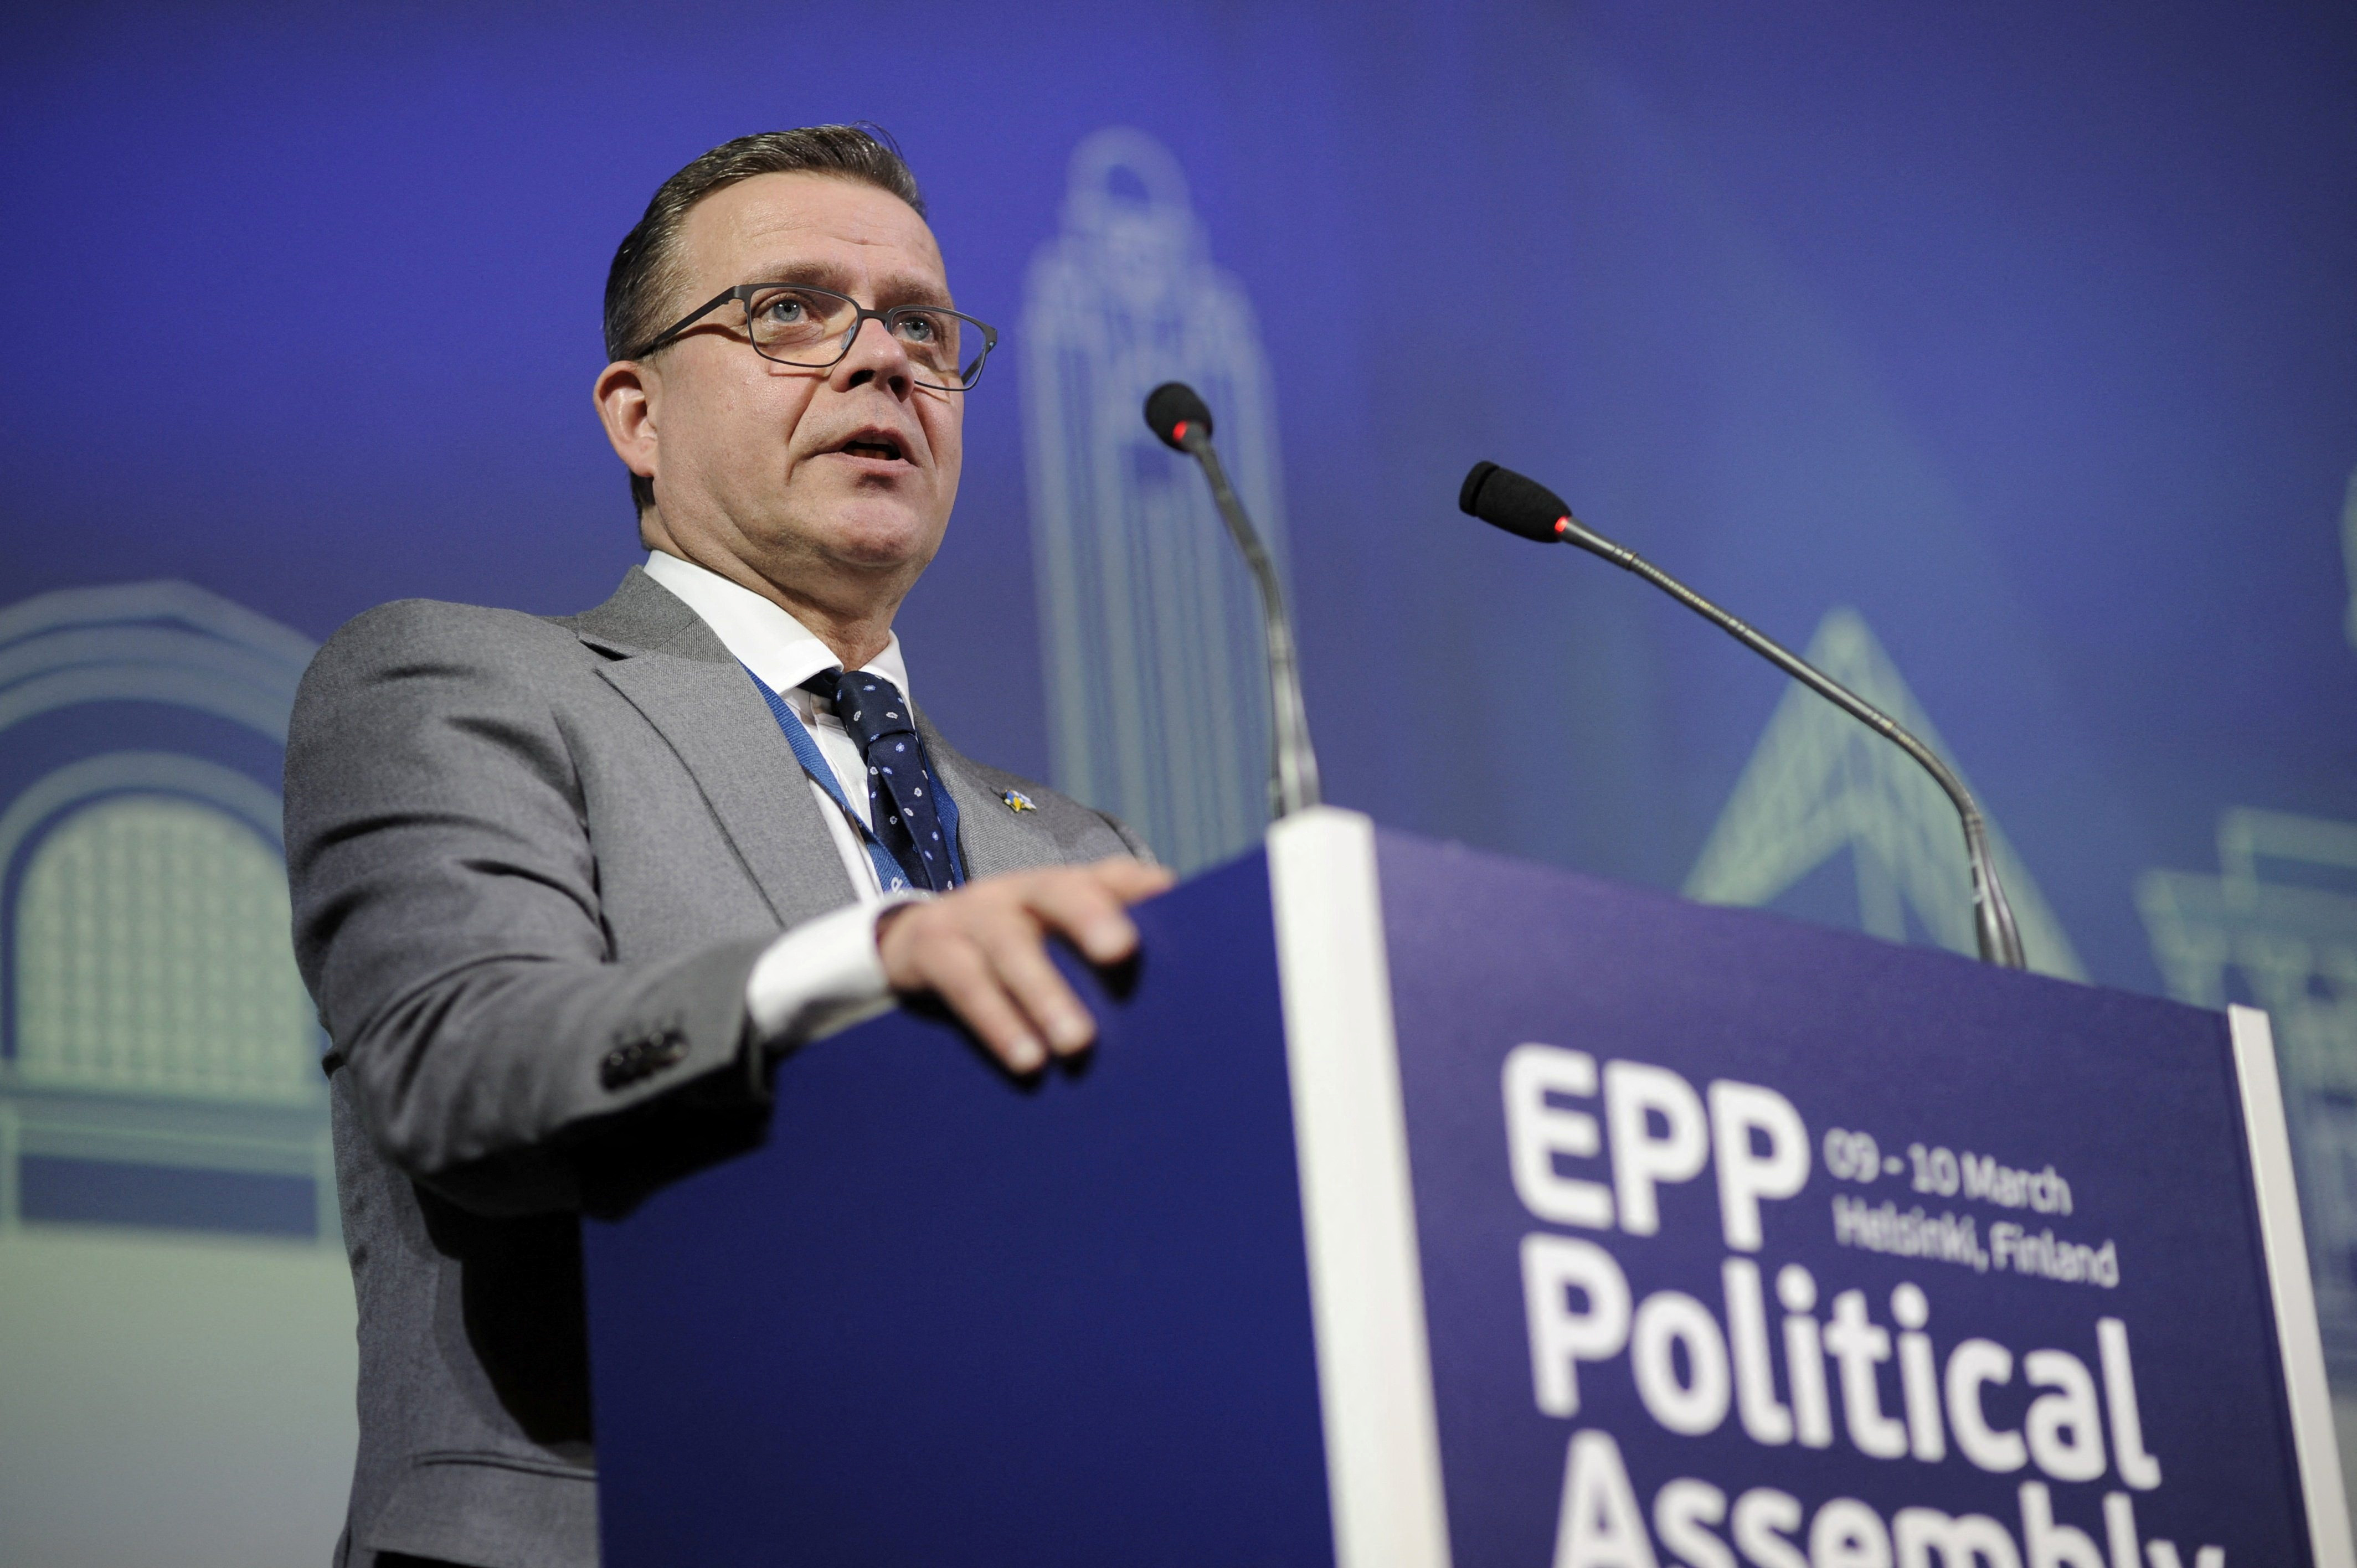 EPP Political Assembly gathers in Helsinki